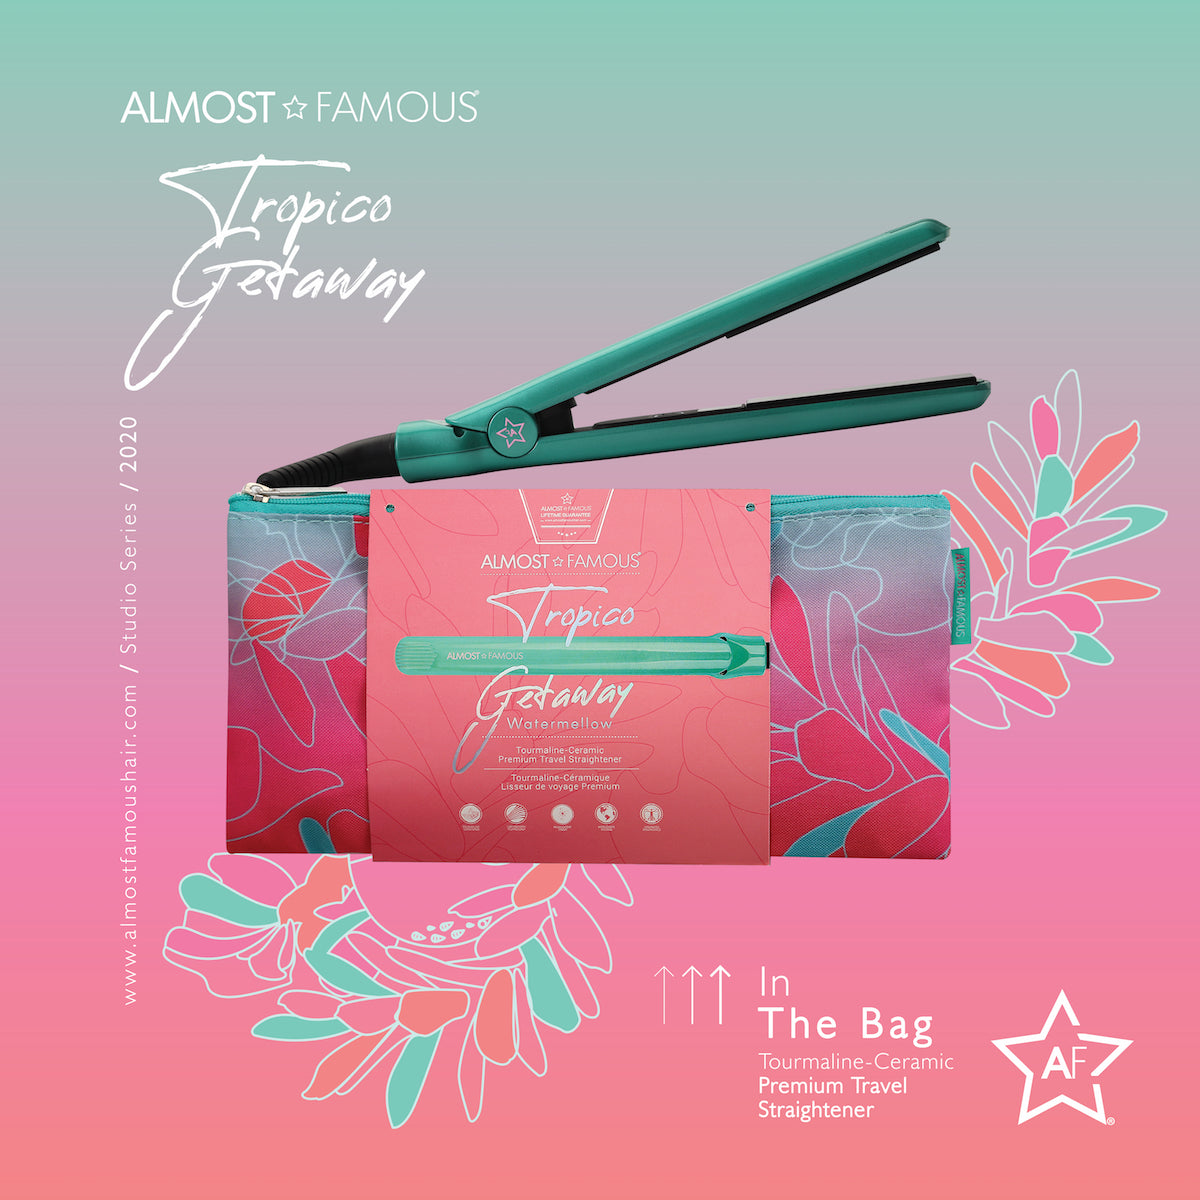 Almost Famous 0.5" Tropico Getaway Mini Travel Flat Iron+Designer Bag - HAB 